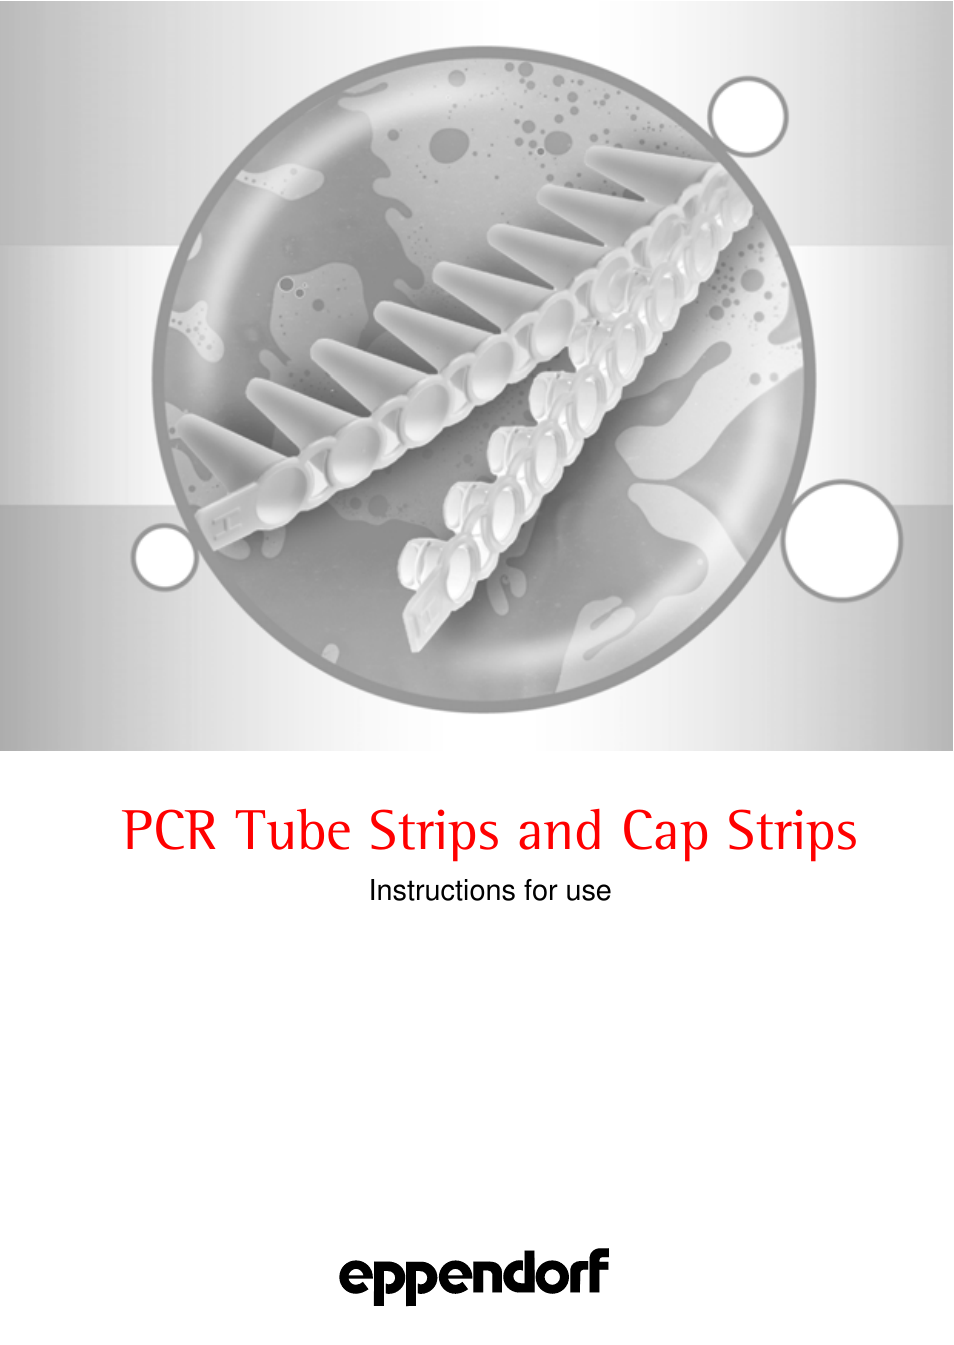 PCR Cap Strips